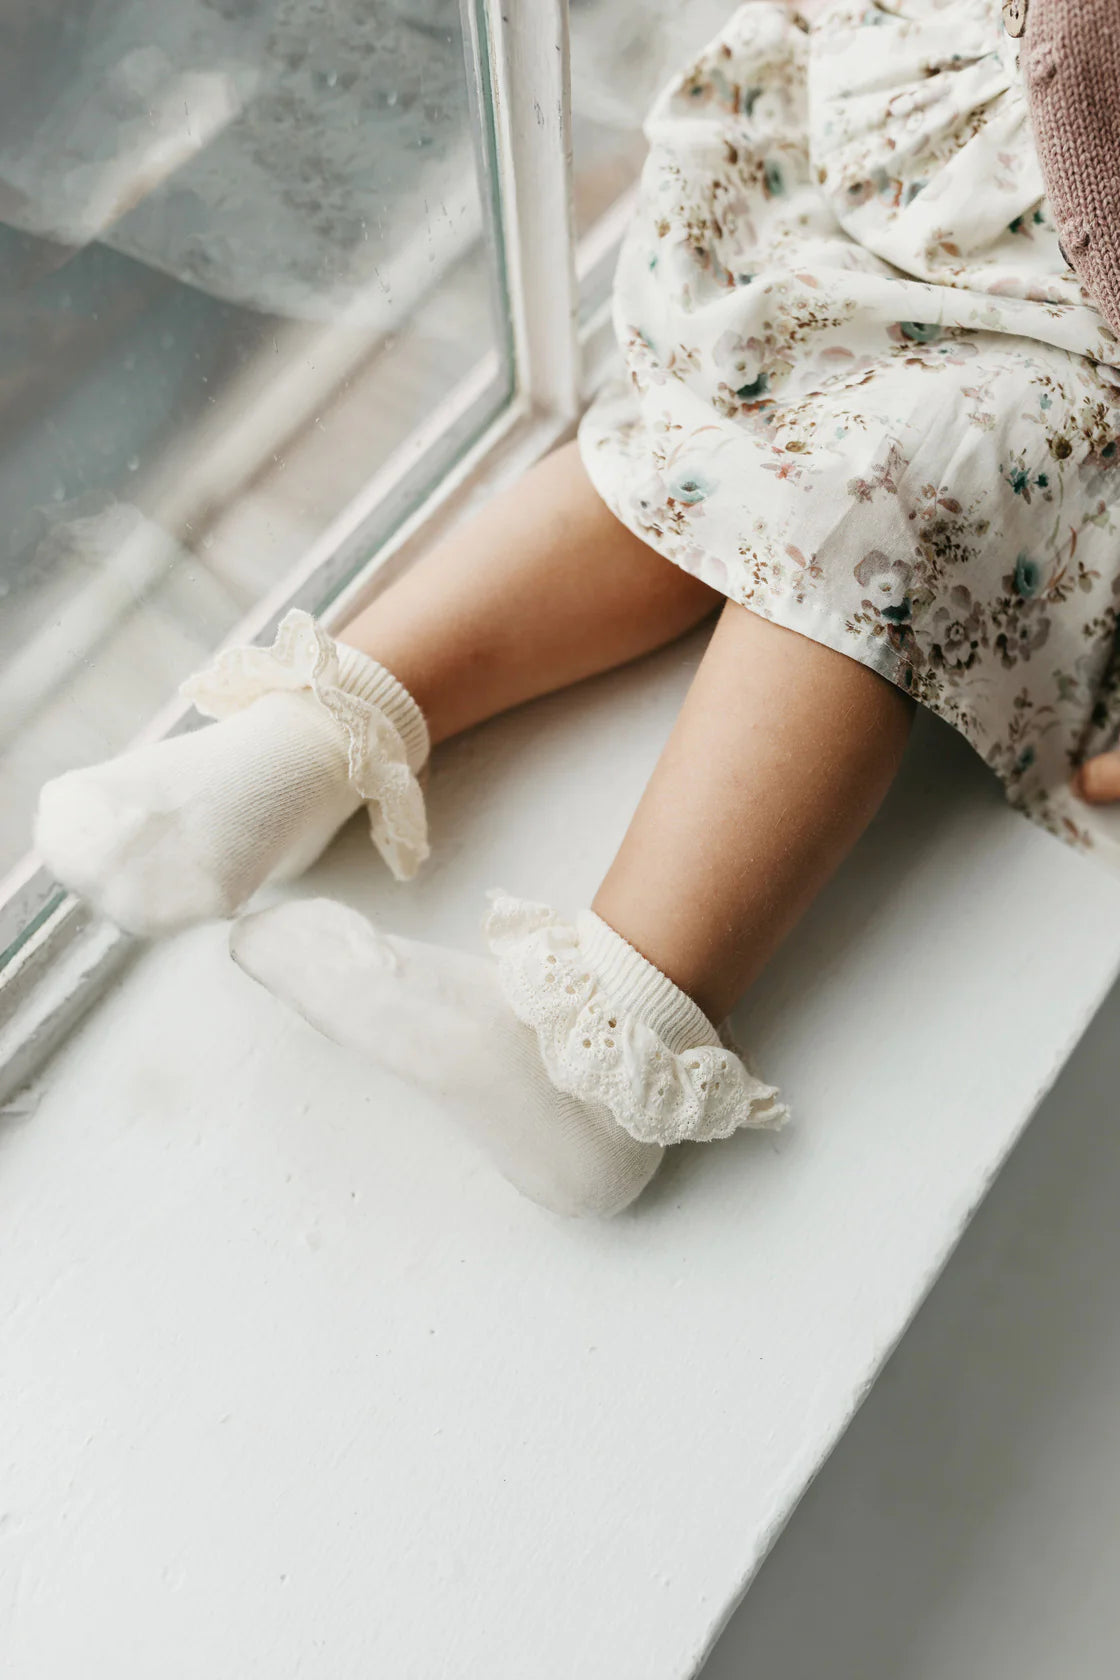 Frill Ankle Sock | White